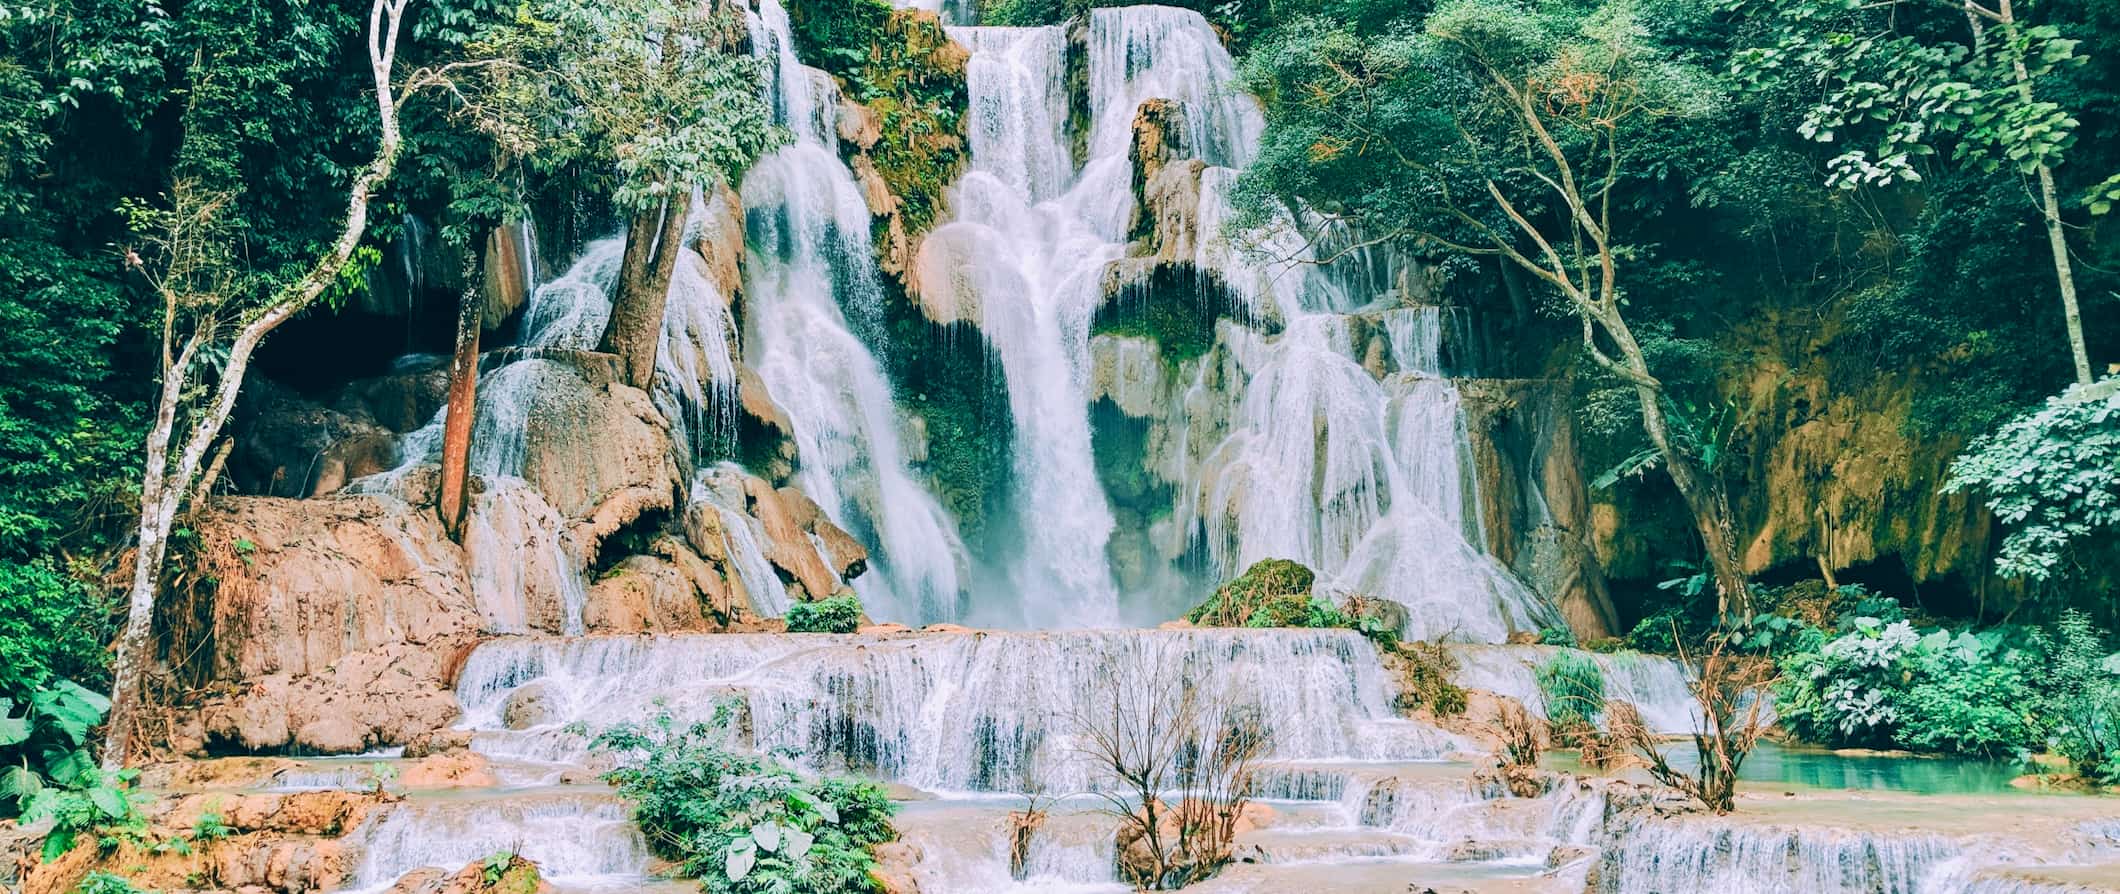 The famous Kuang Si waterfalls near Luang Prabang, Laos